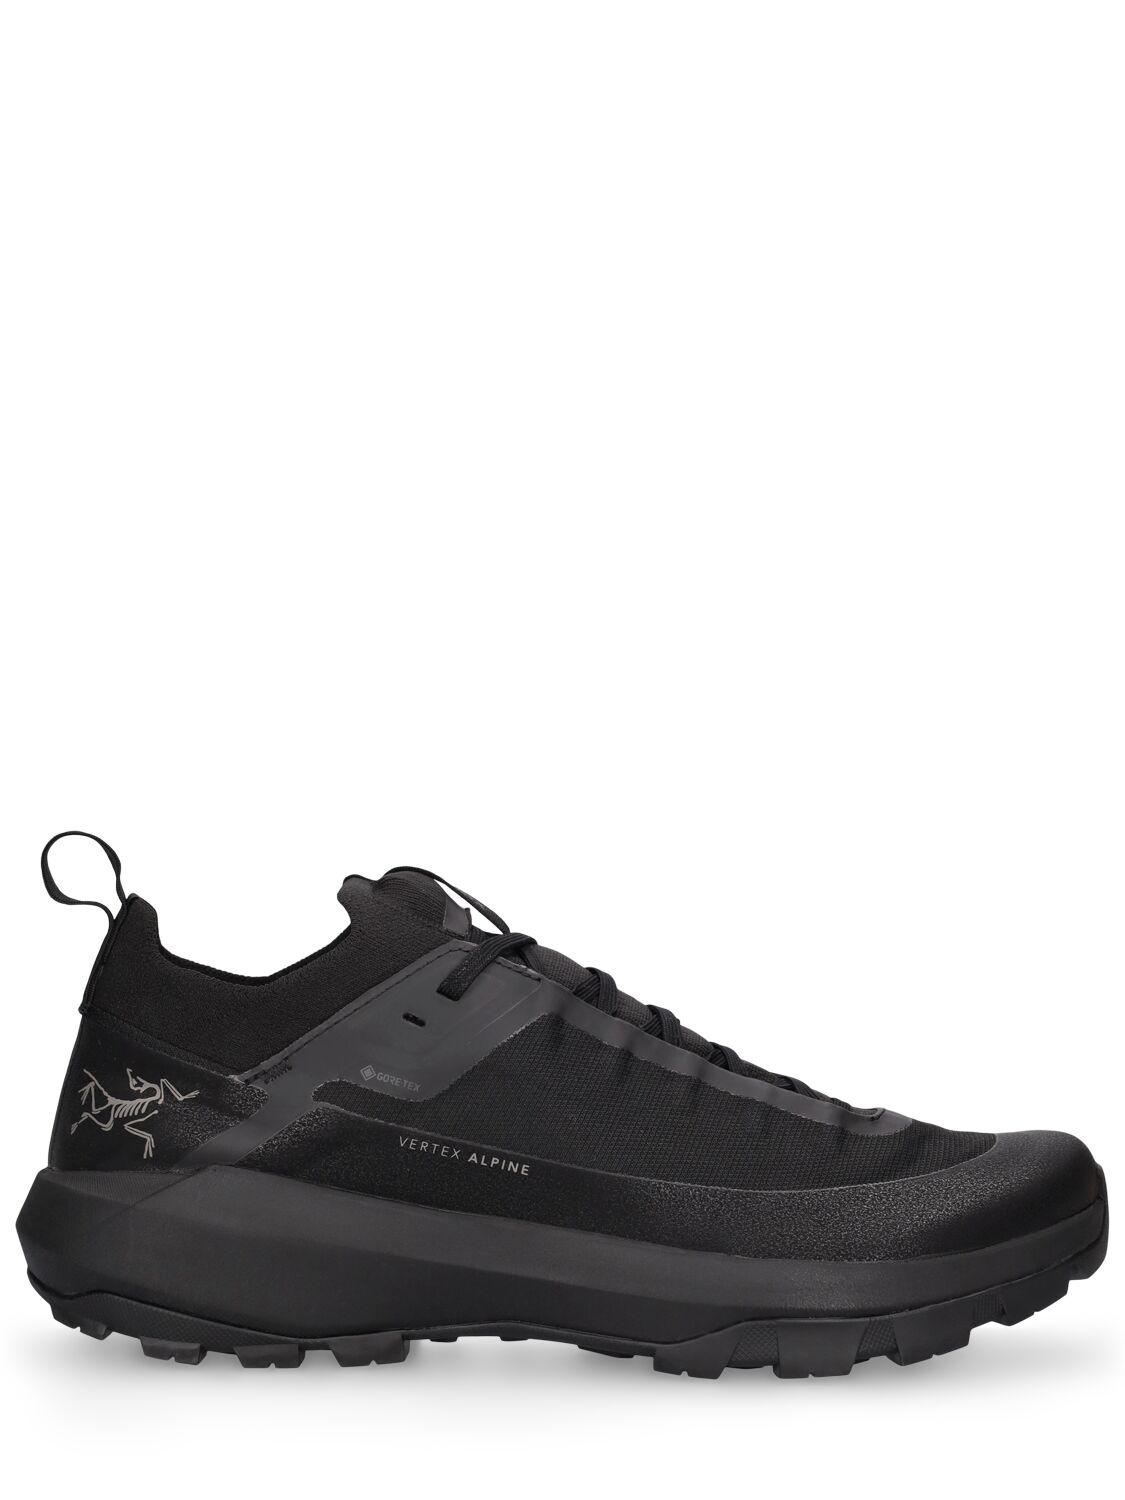 Arc'teryx Vertex Alpine Gtx Sneakers In Black